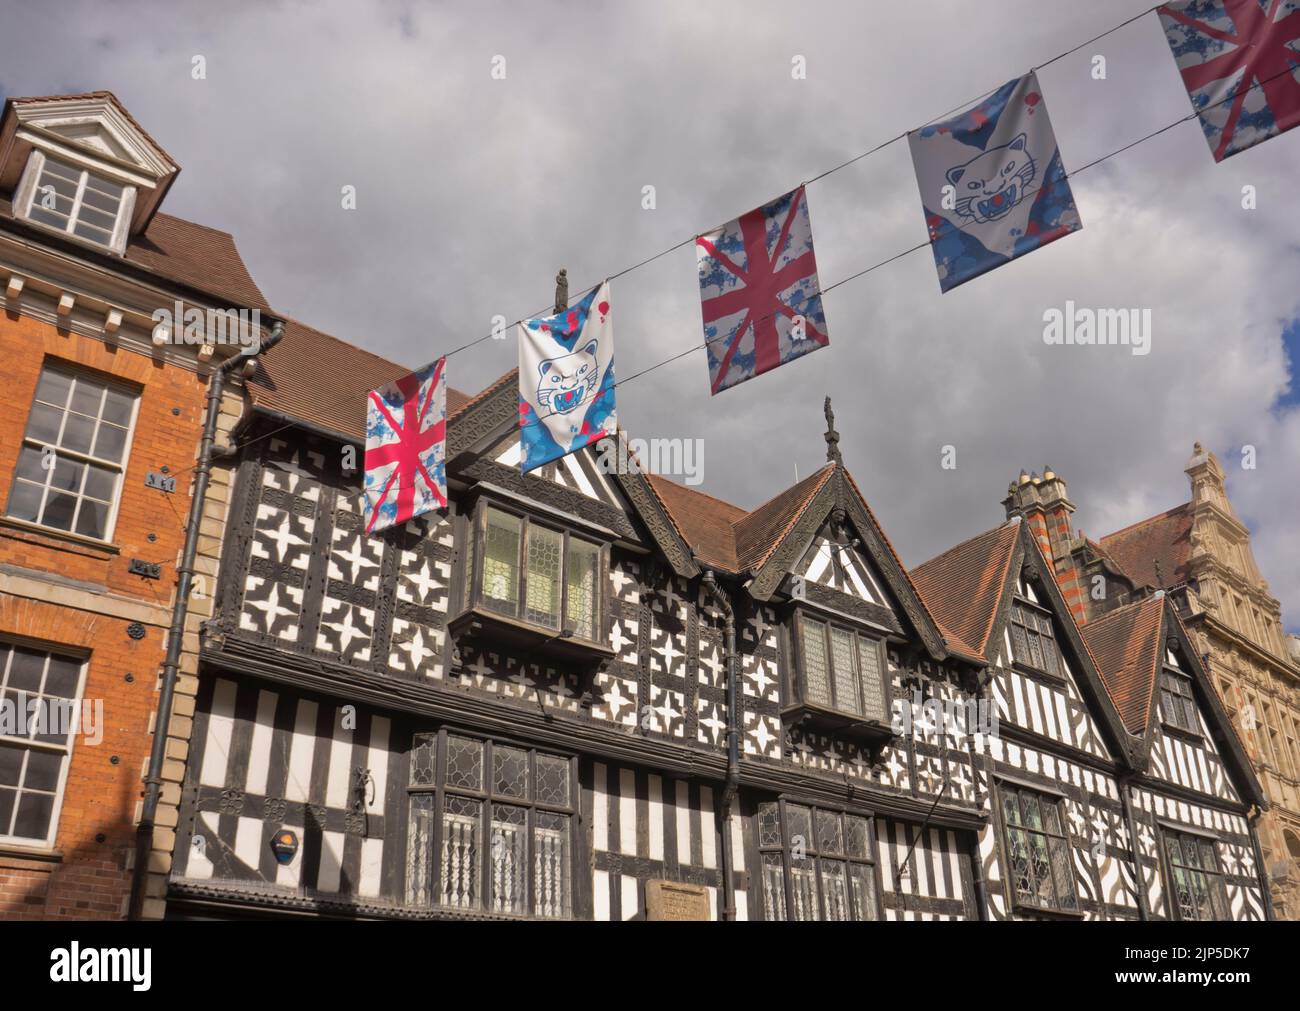 Views of the Tudor old buildings in Shrewsbury, Shropshire,England,UK Stock Photo